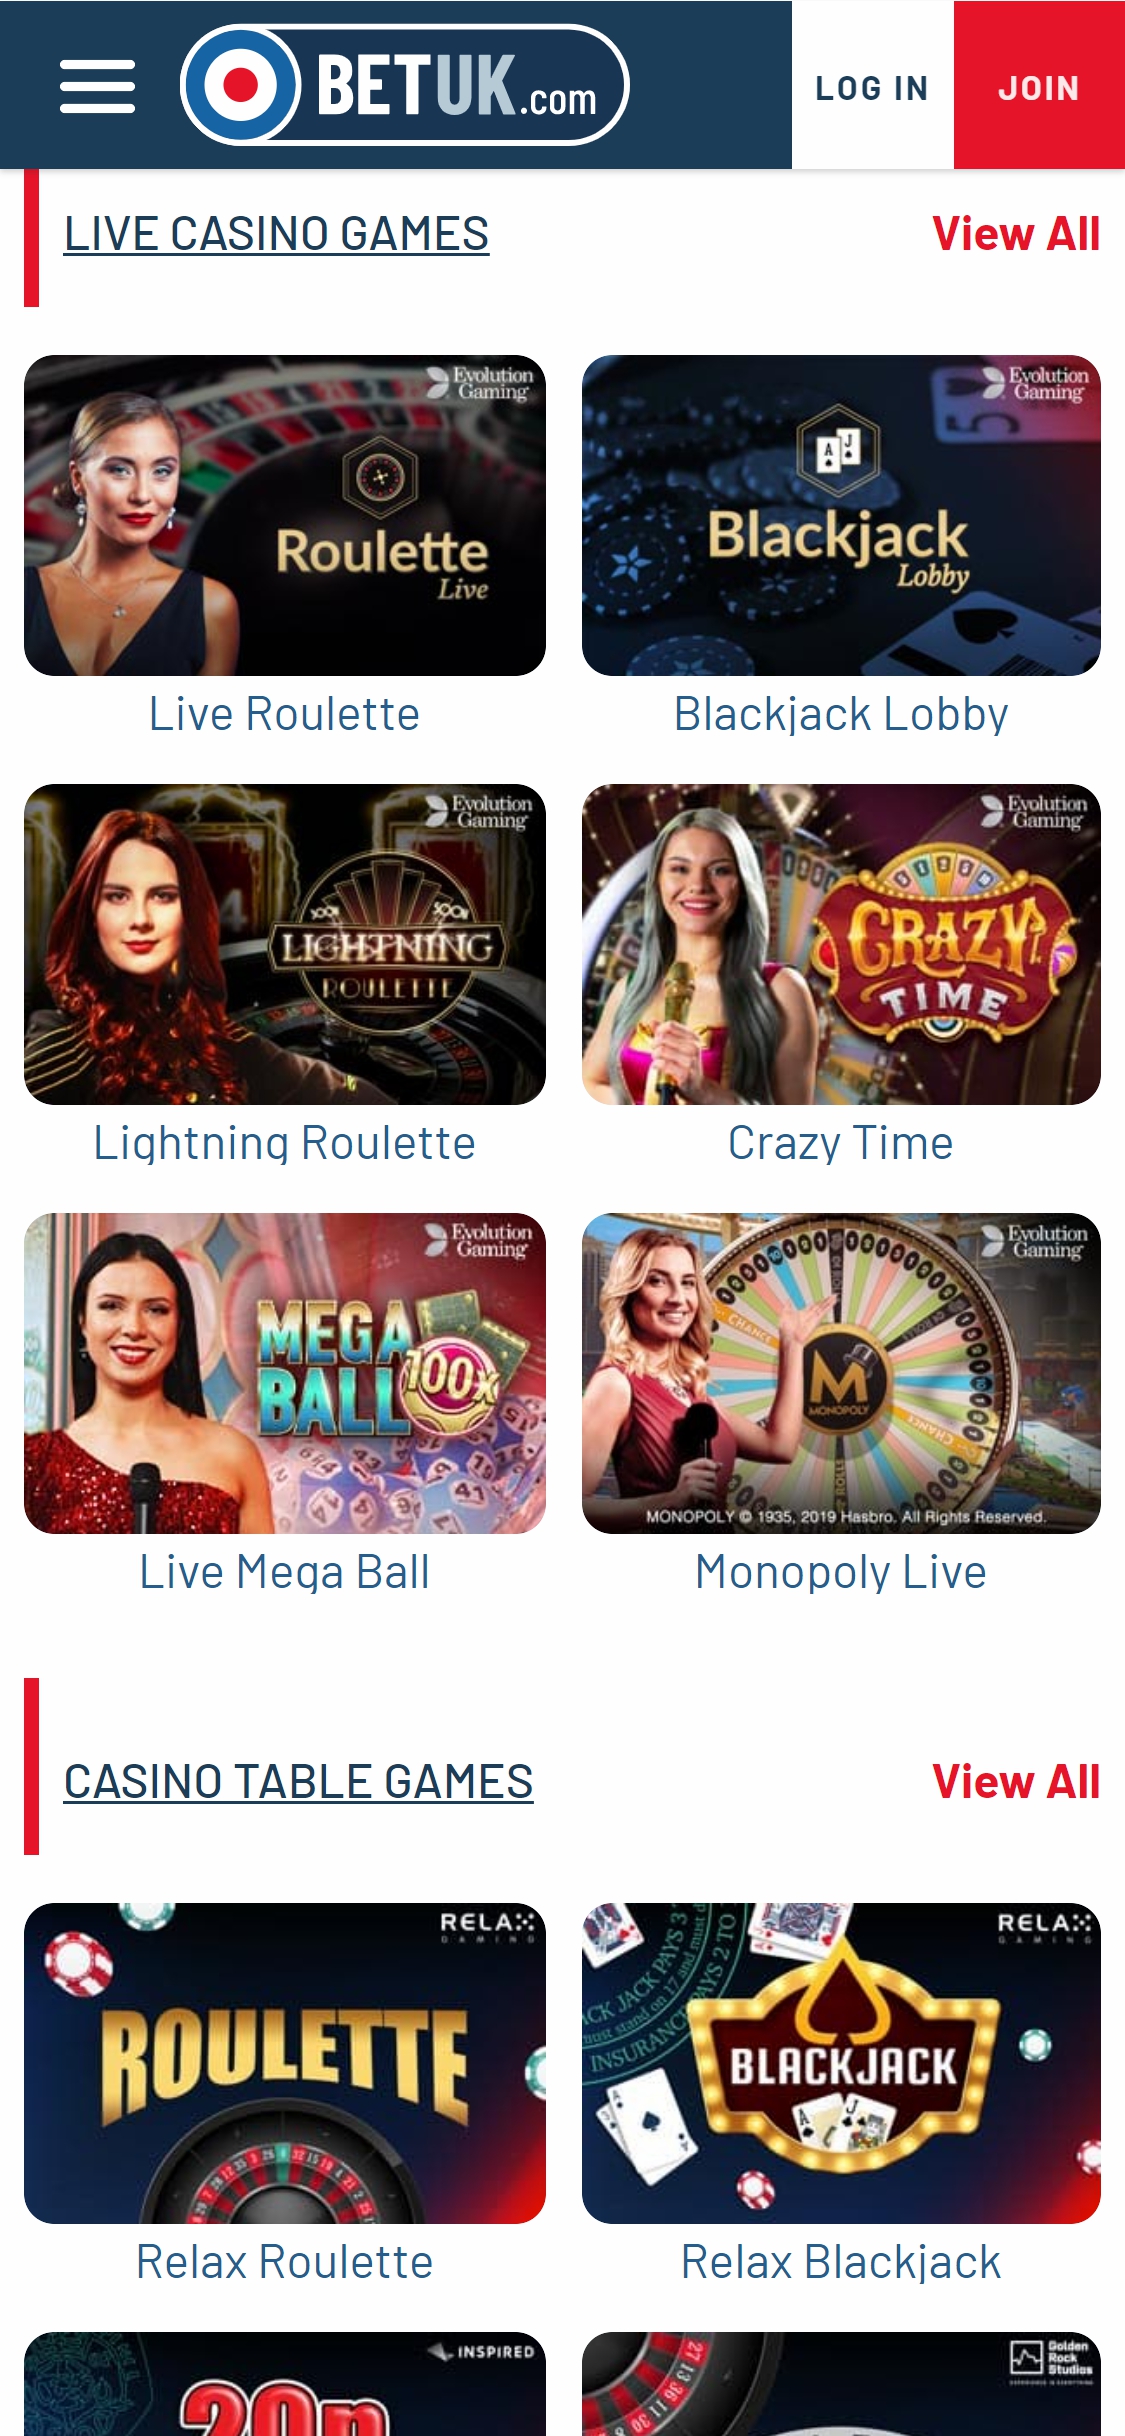 Betuk Casino Mobile Live Dealer Games Review